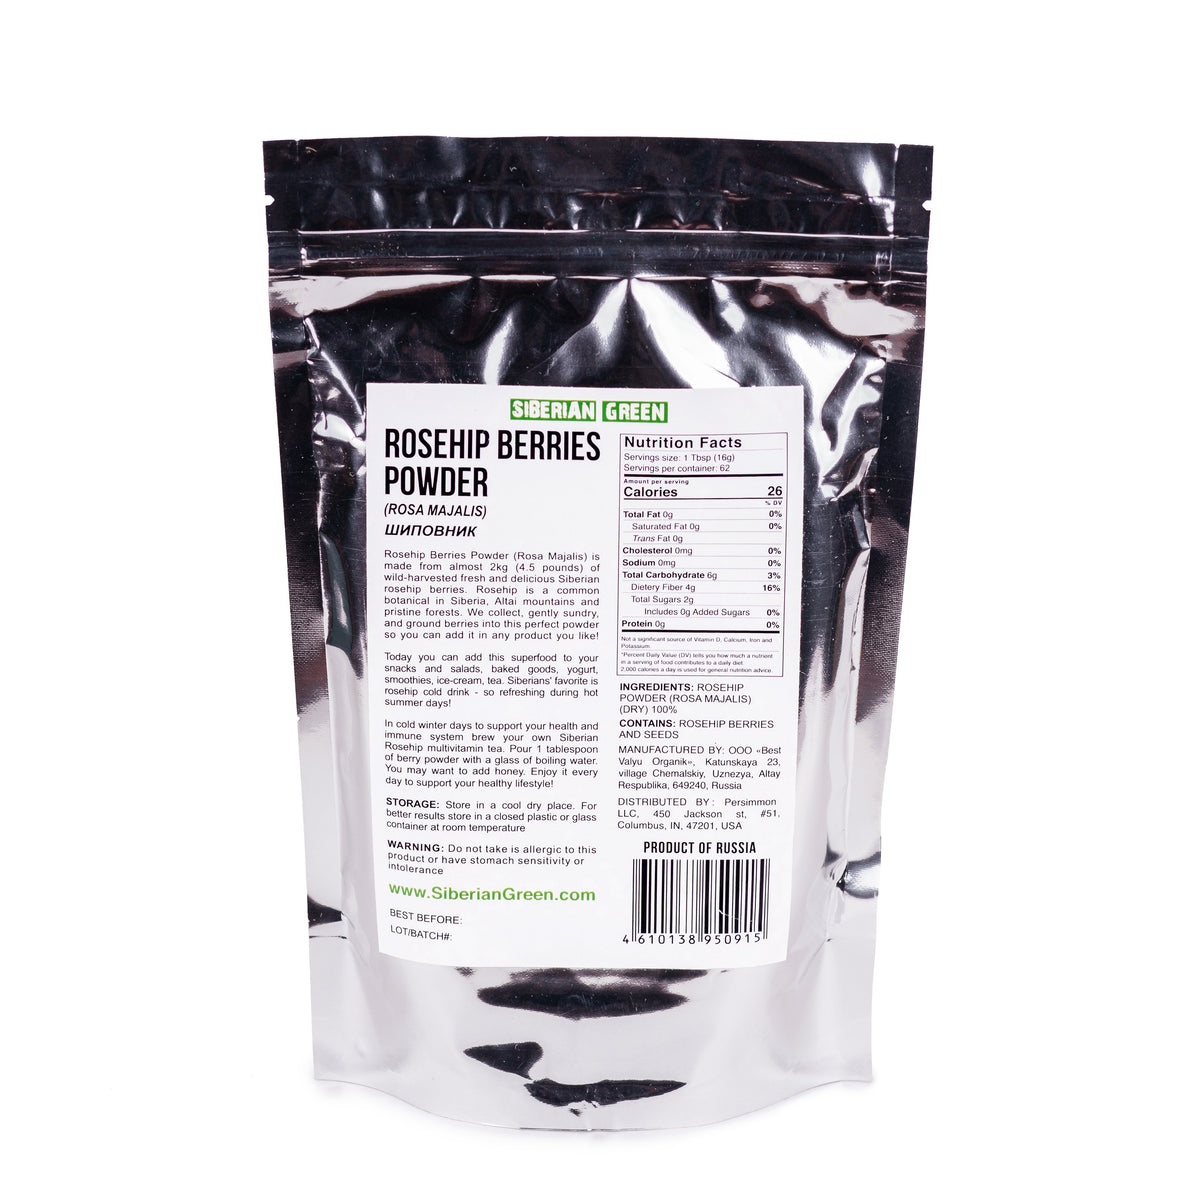 Siberian Rose Hips Powder 300g (10.58 oz) - Rosehips Herbal Tea Flour from Wild Harvested Seeds